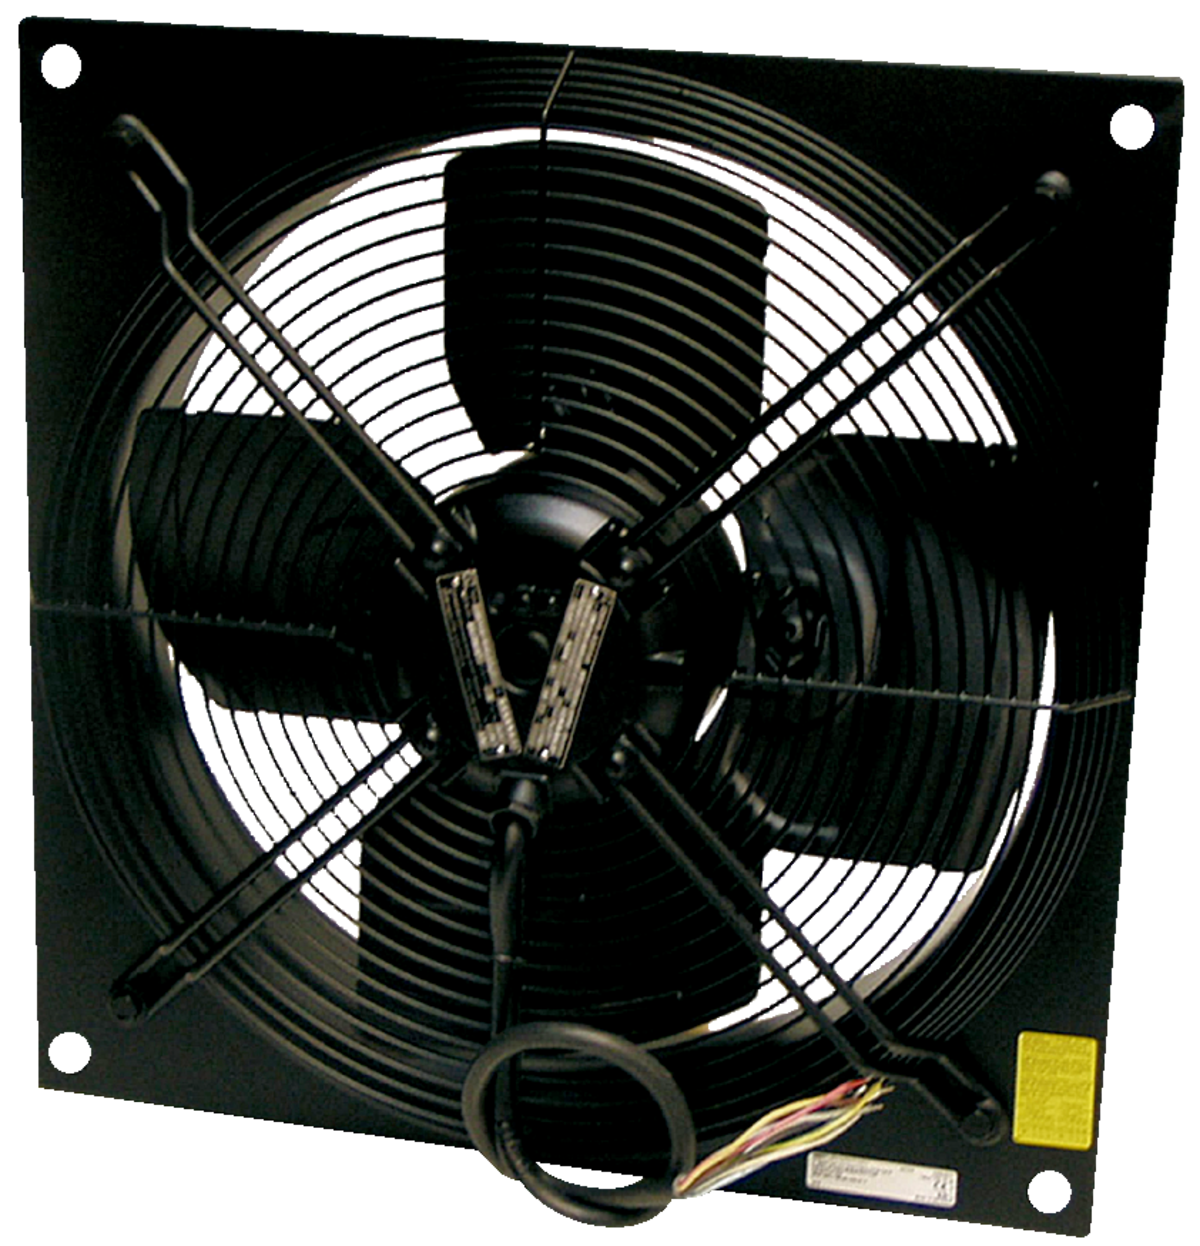 AW-EX - Axiale ventilatoren - Ventilatoren & Accessoires - Producten - Systemair